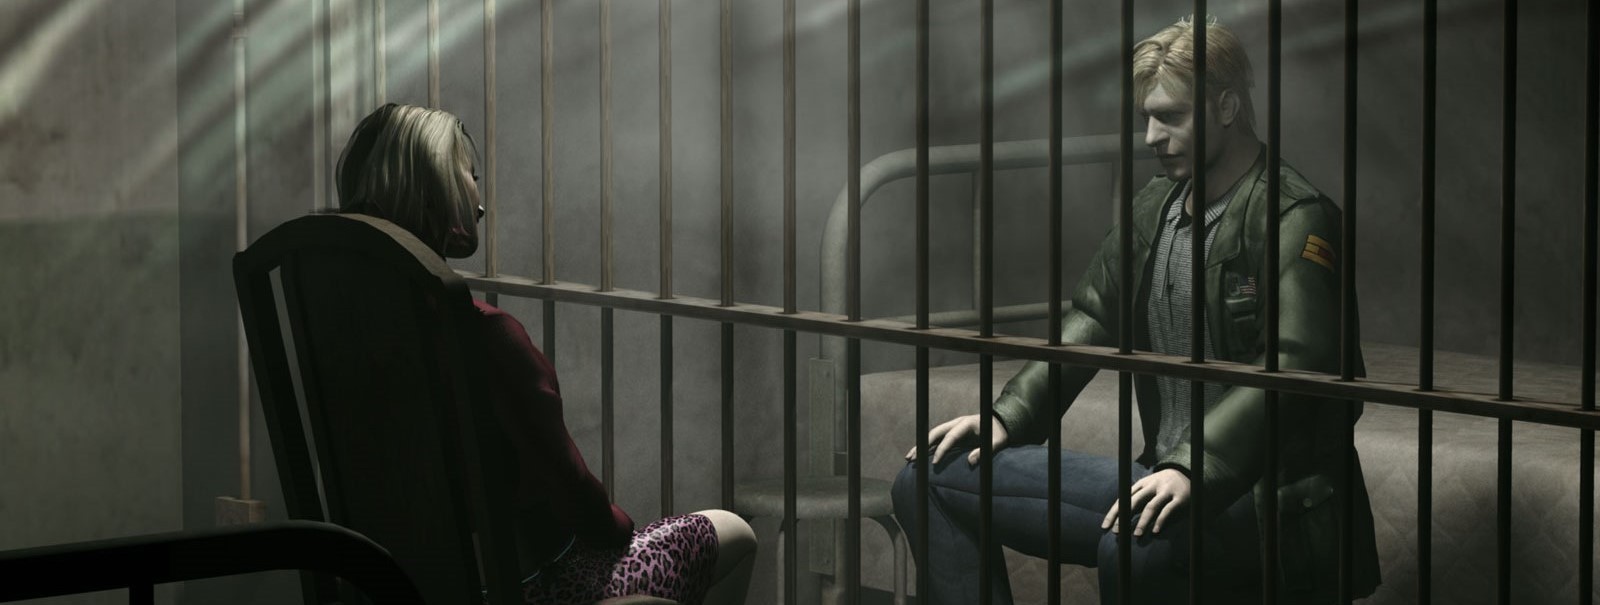 Silent Hill 2 é recriado por fã para o VR! - EvilHazard